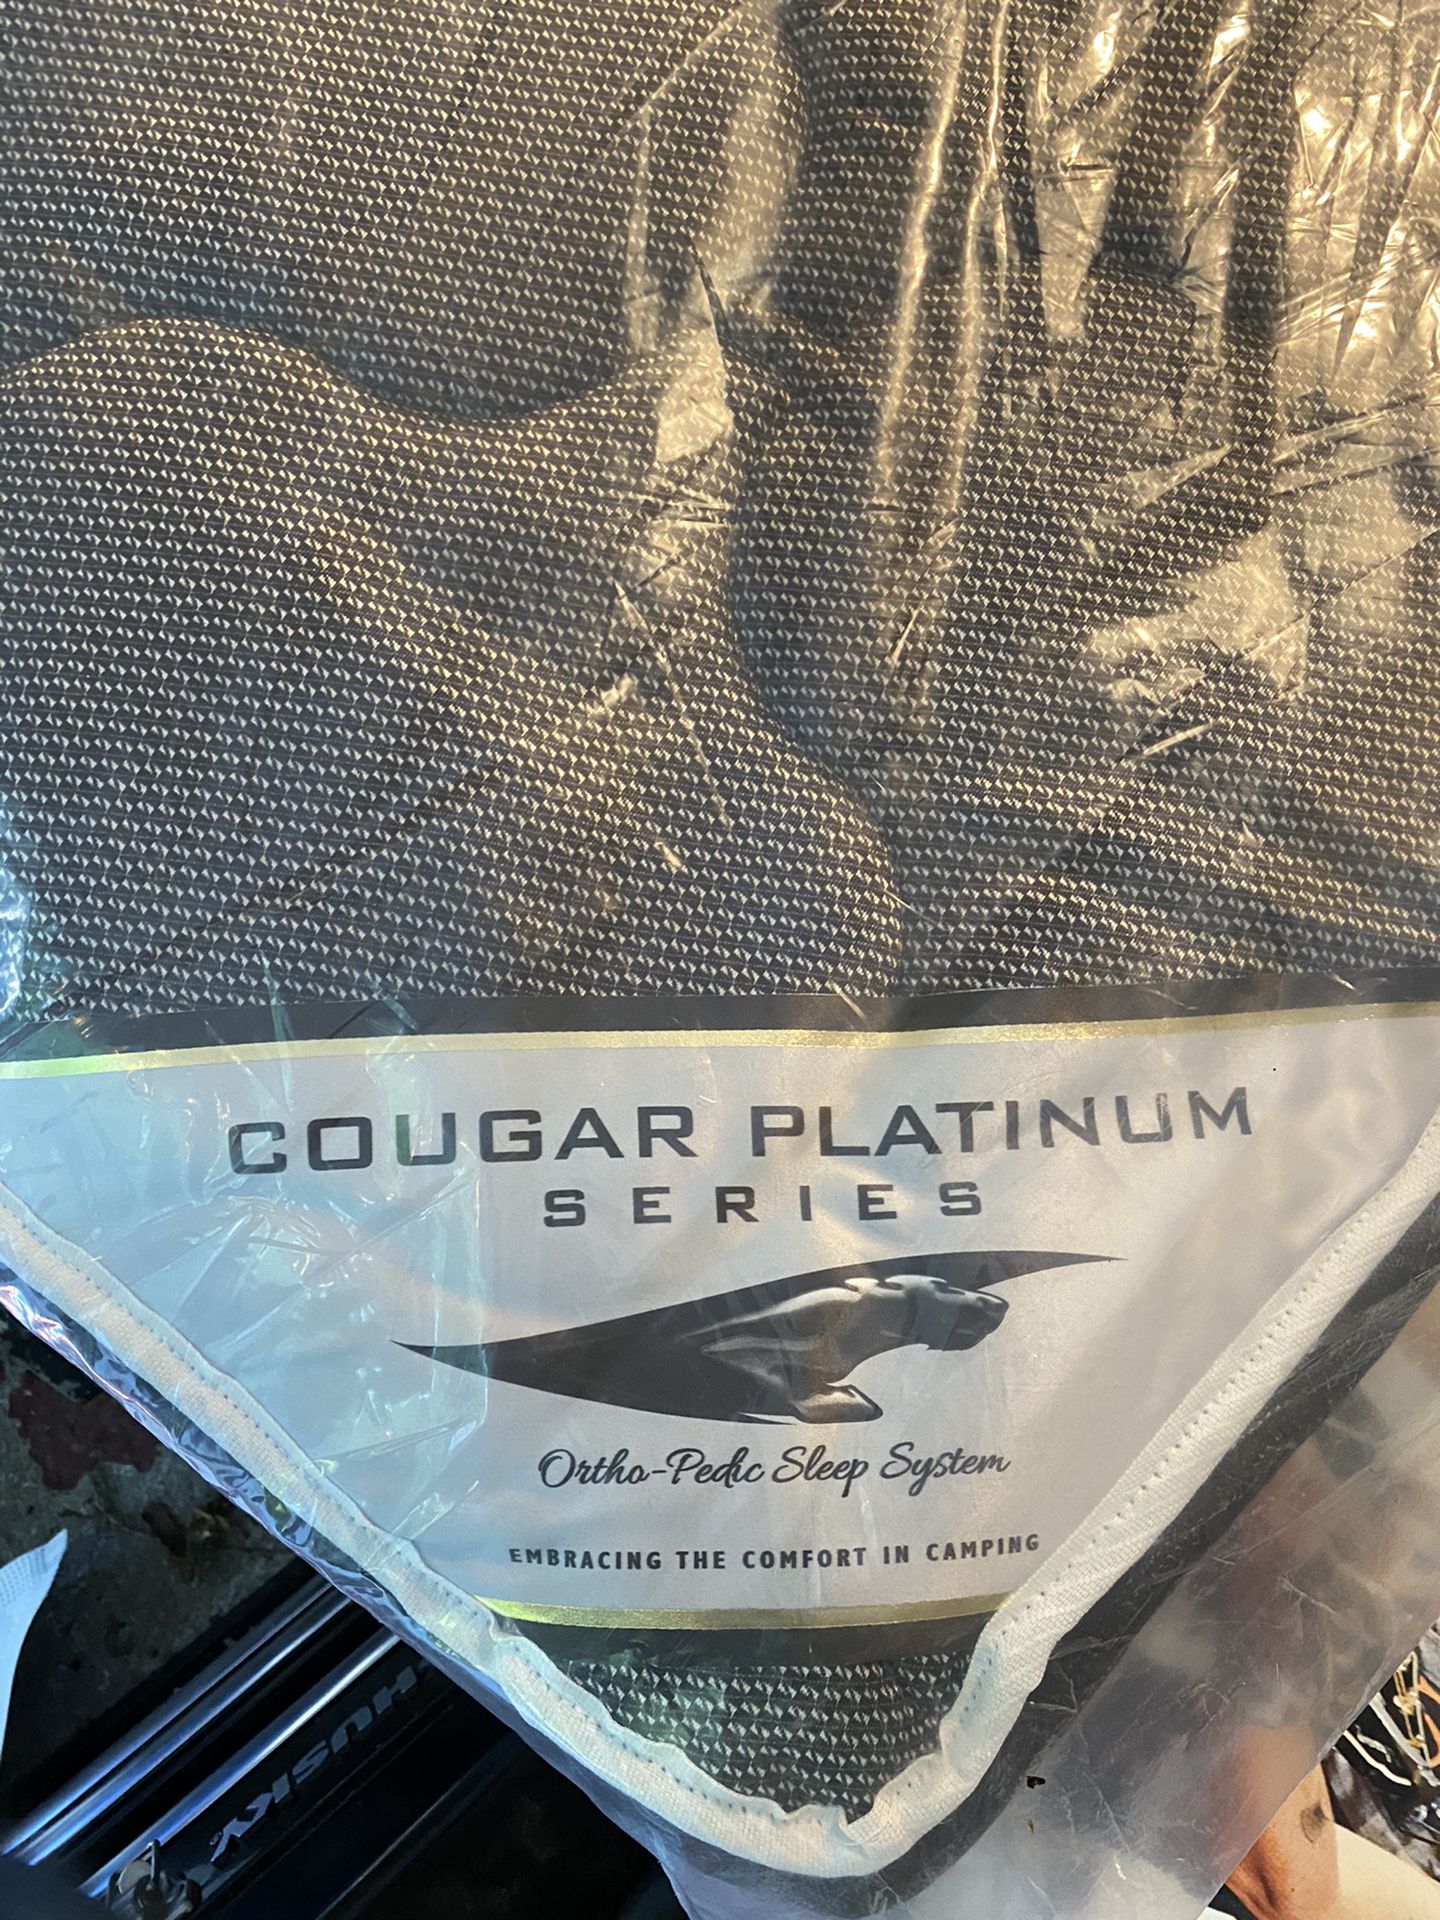 Cougar Platinum Series king size camp trailer bed.